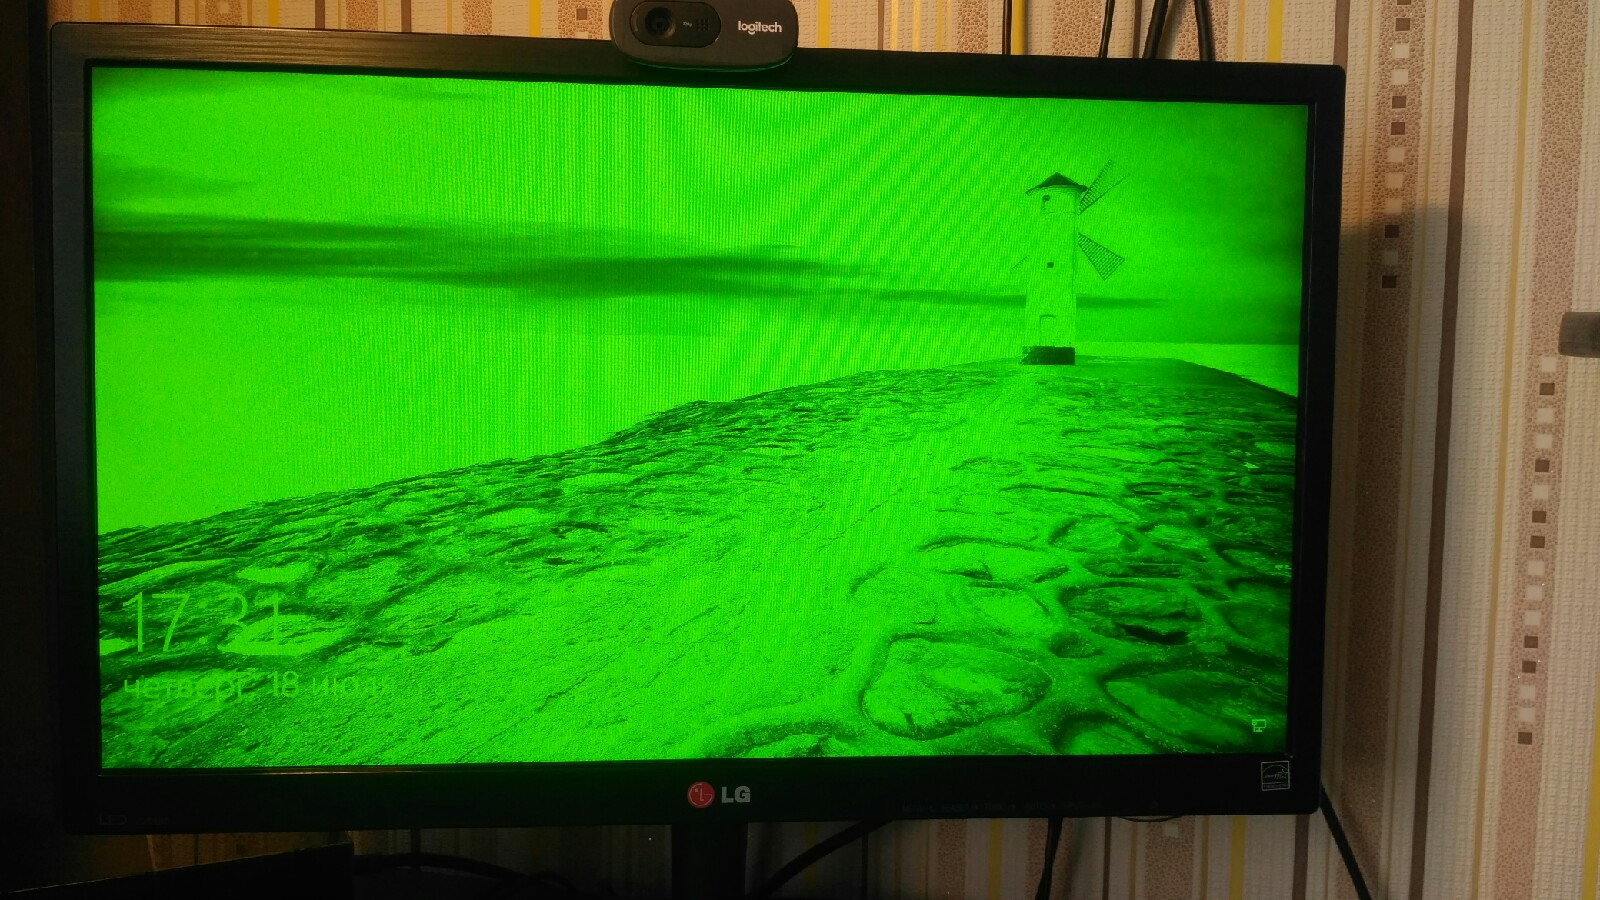 diamond vc500 screen is green and purple